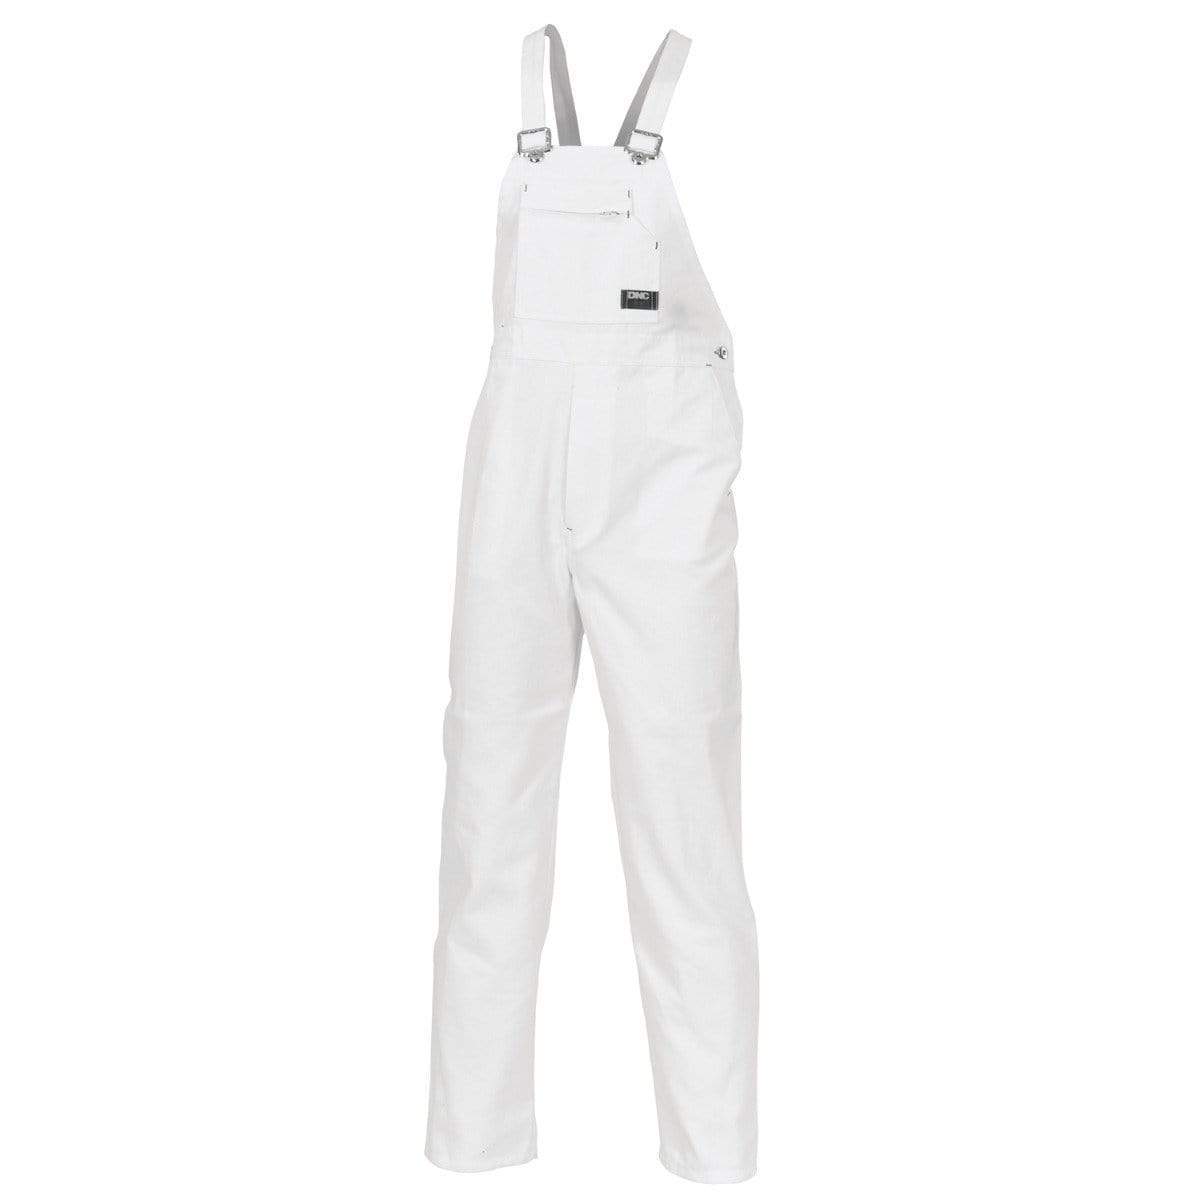 Dnc Workwear Cotton Drill Bib And Brace Overall - 3111 Work Wear DNC Workwear White 77R 